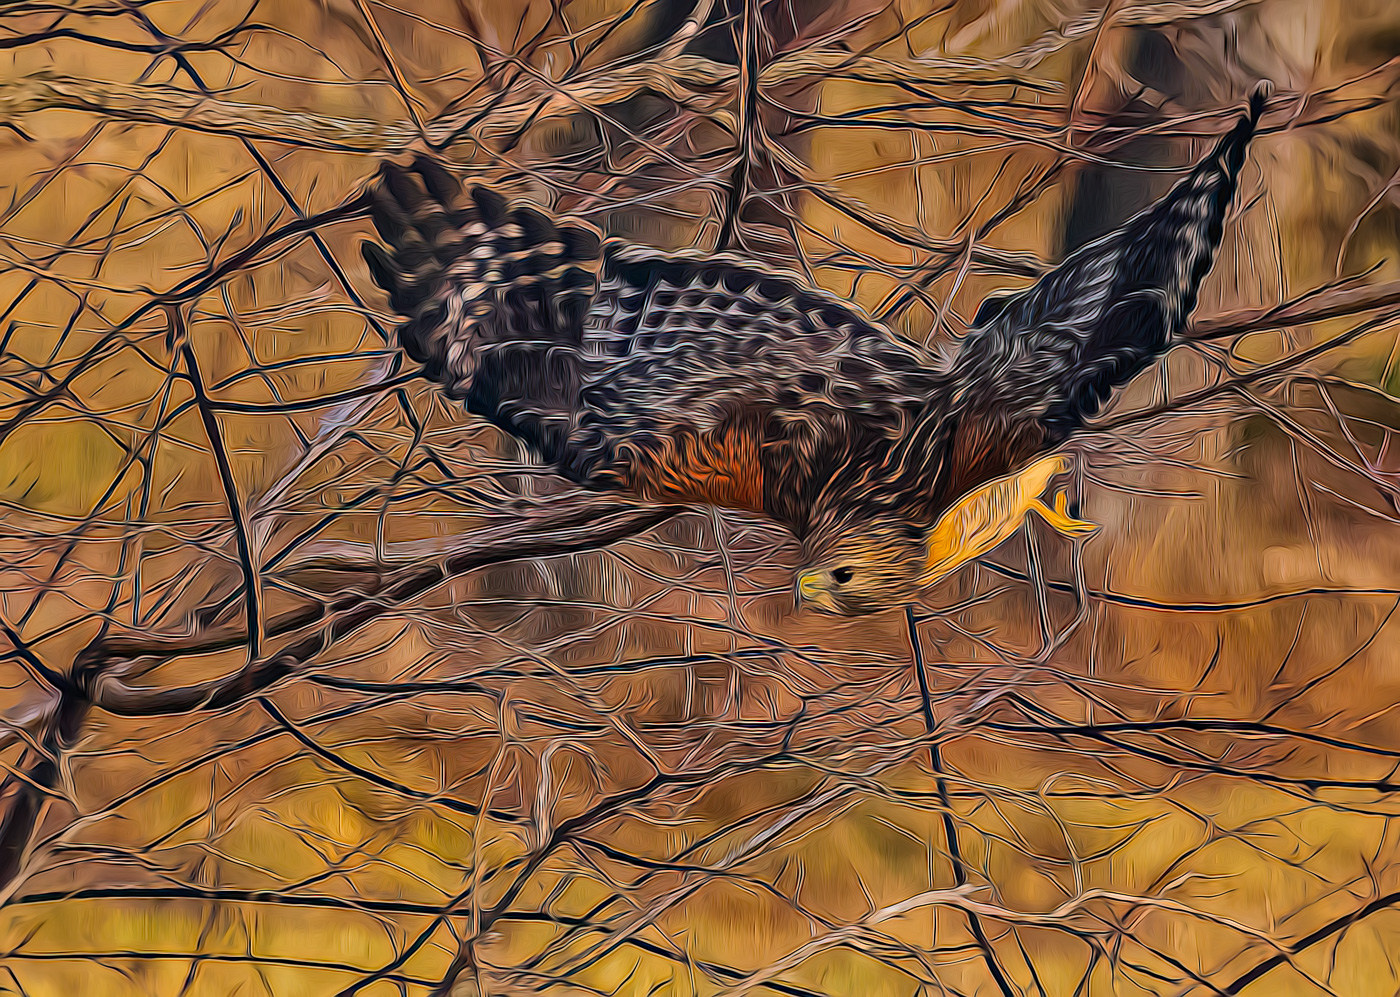 Red Shouldered Hawk by Bob Legg